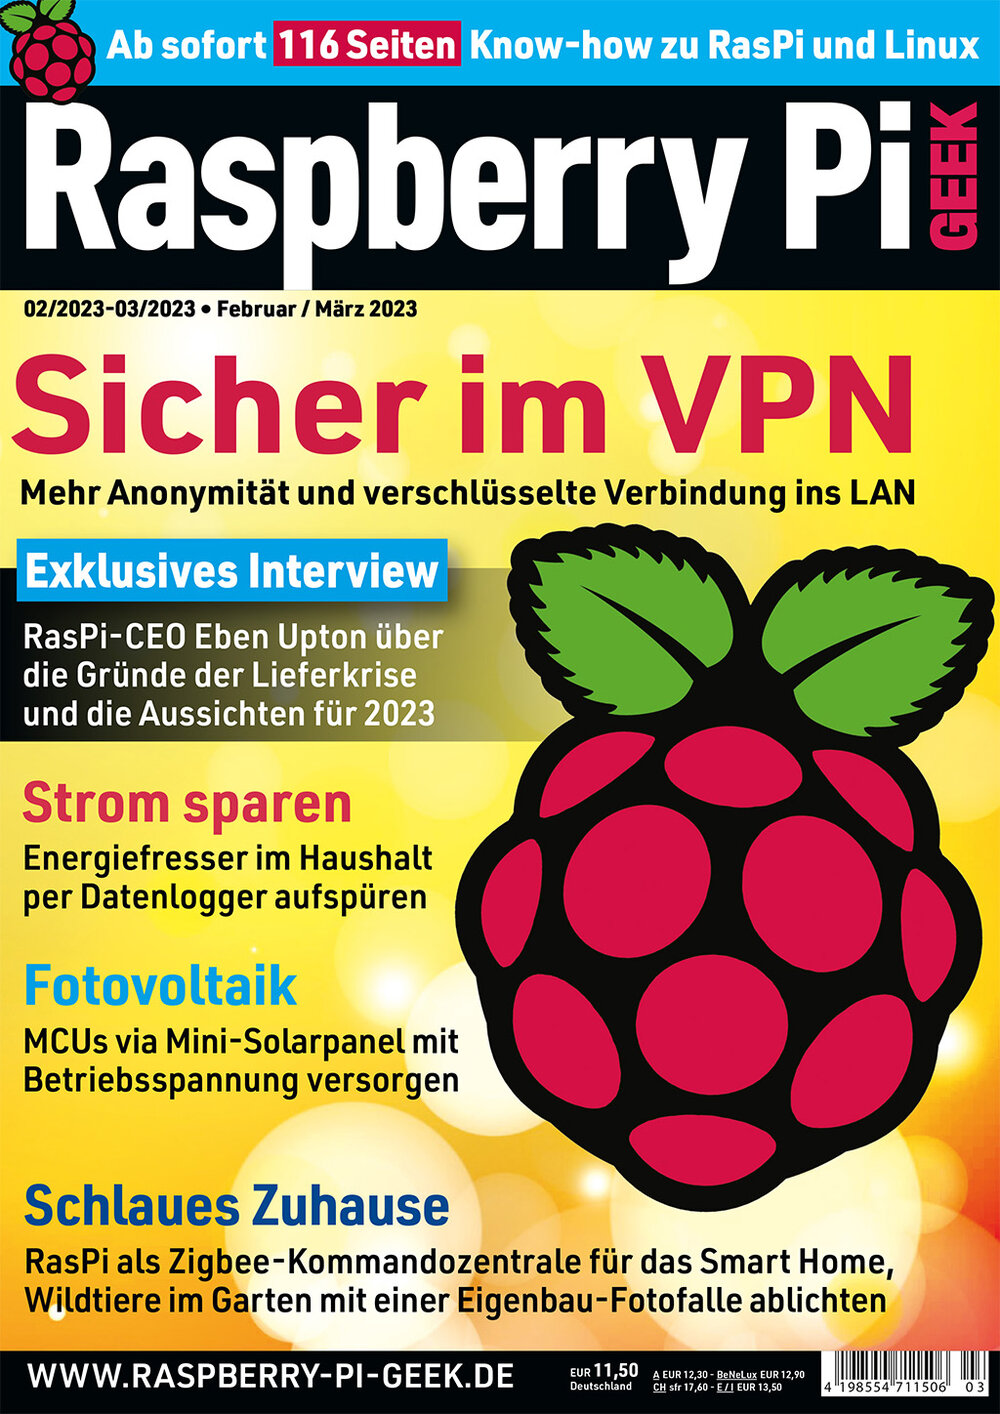 Probeabo: Raspberry Pi Geek Digital-Ausgabe